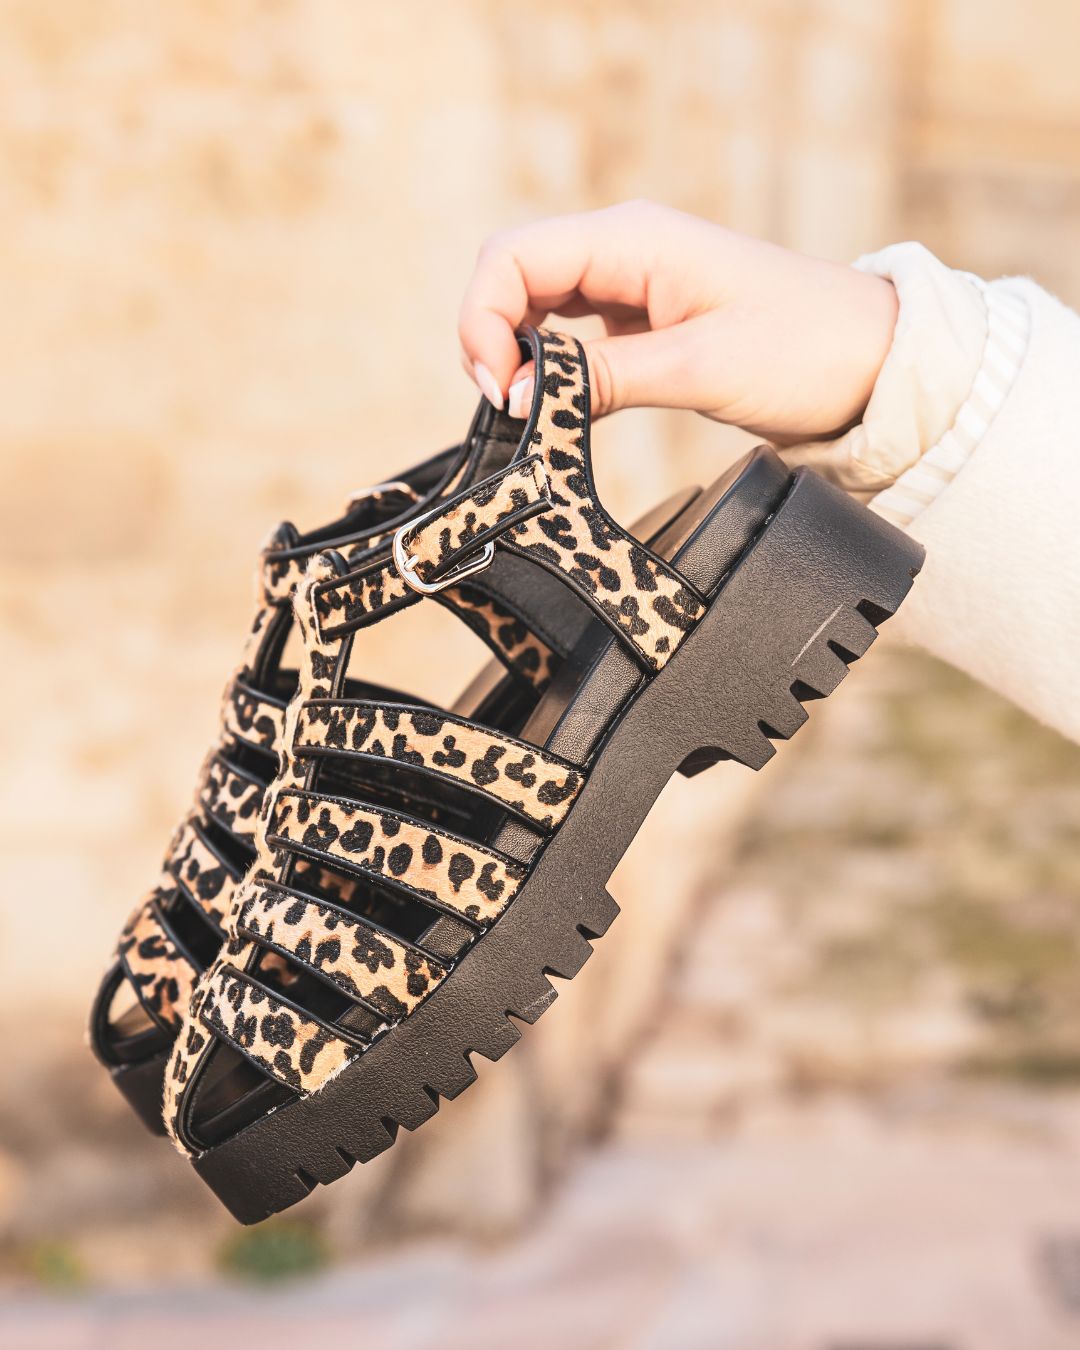 Sandale femme plateforme confort motif léopard - Margaux